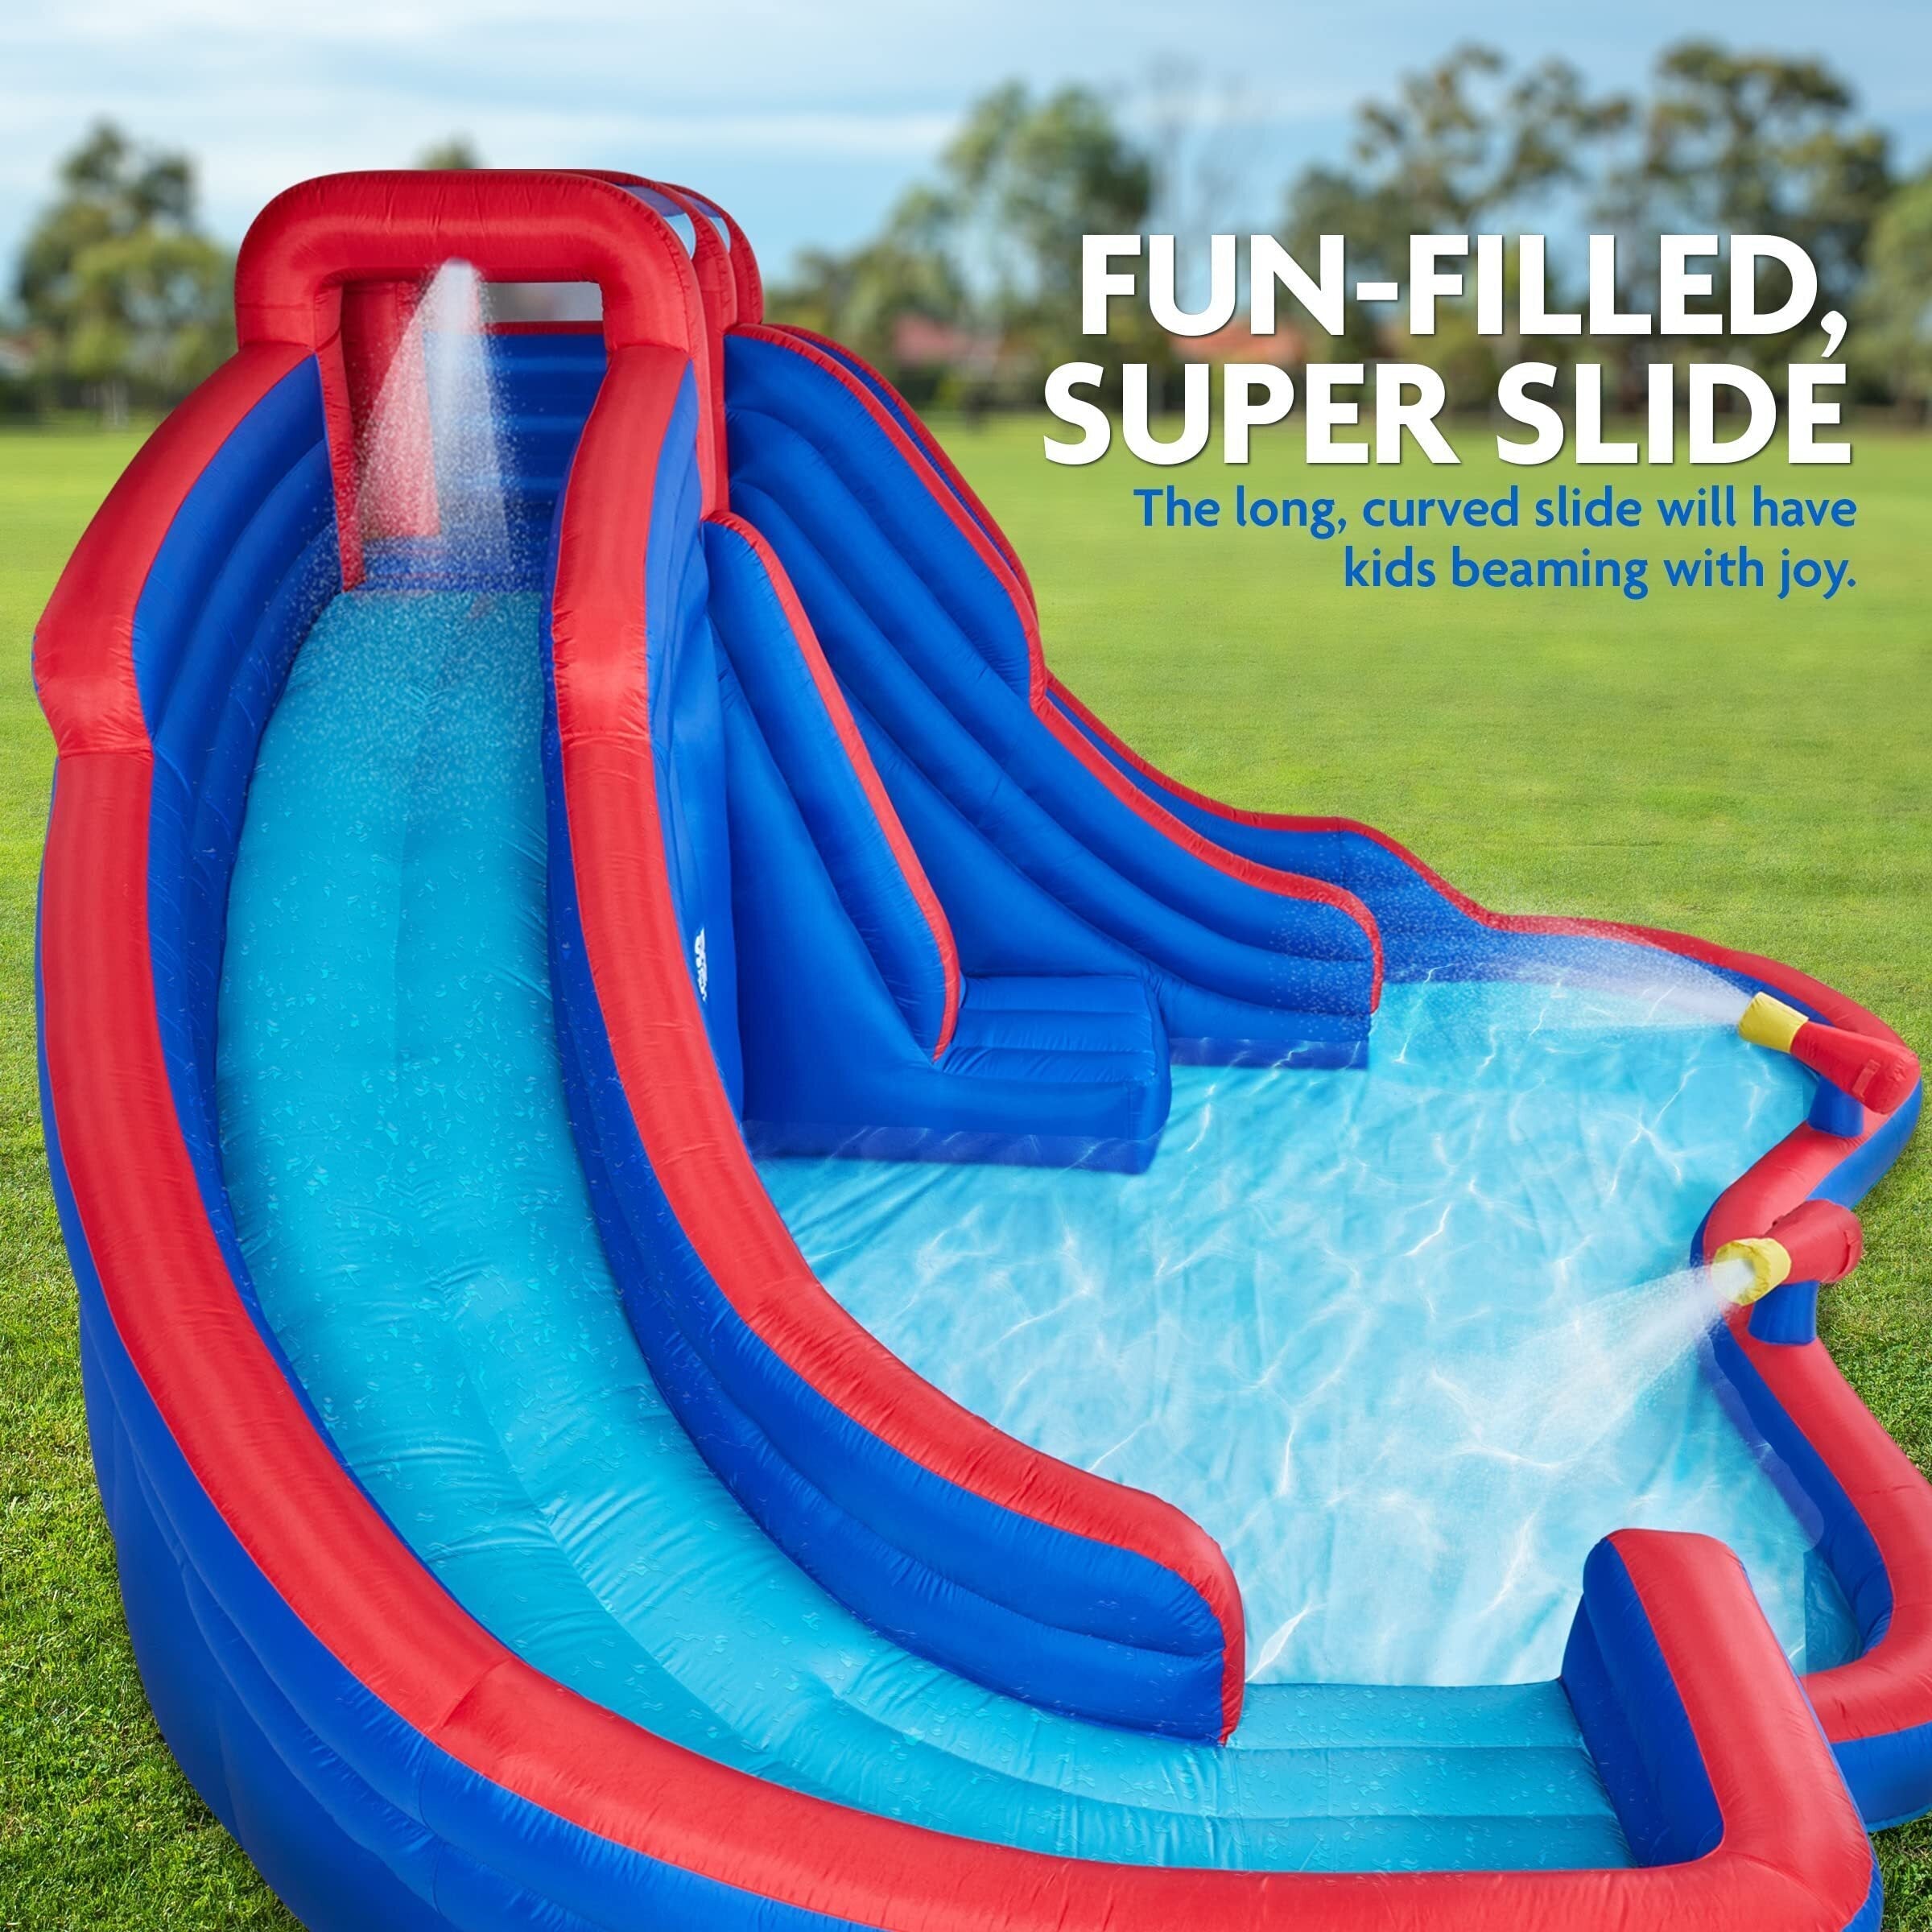 Let Your Little Ones Make a Splash this Summer!